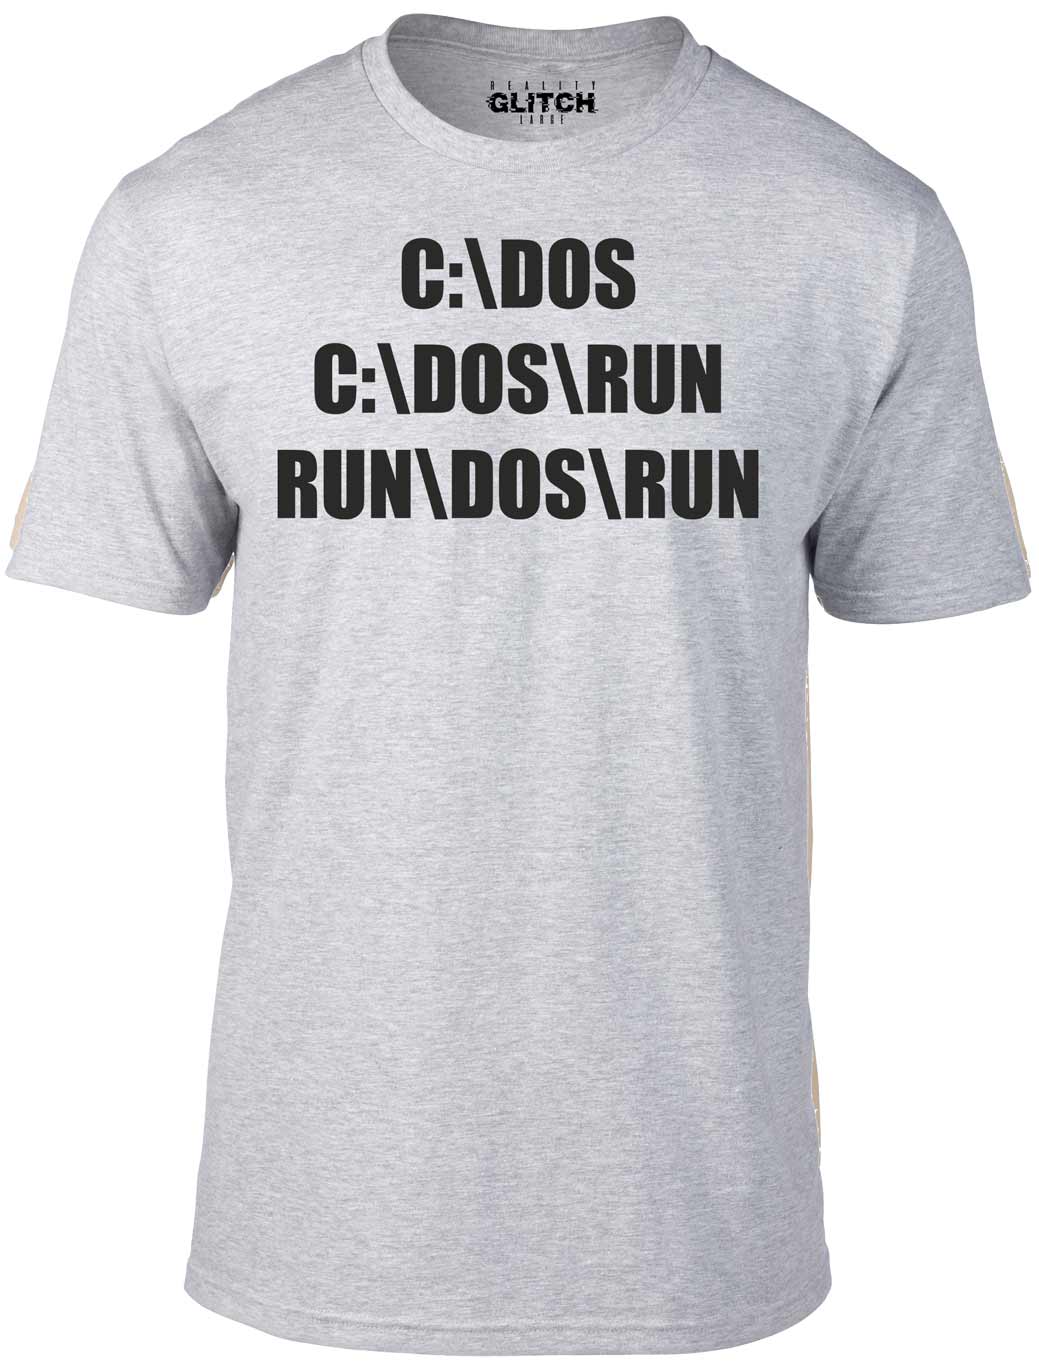 Men's Light Grey T-Shirt With a C DoS Run Programming Printed Design